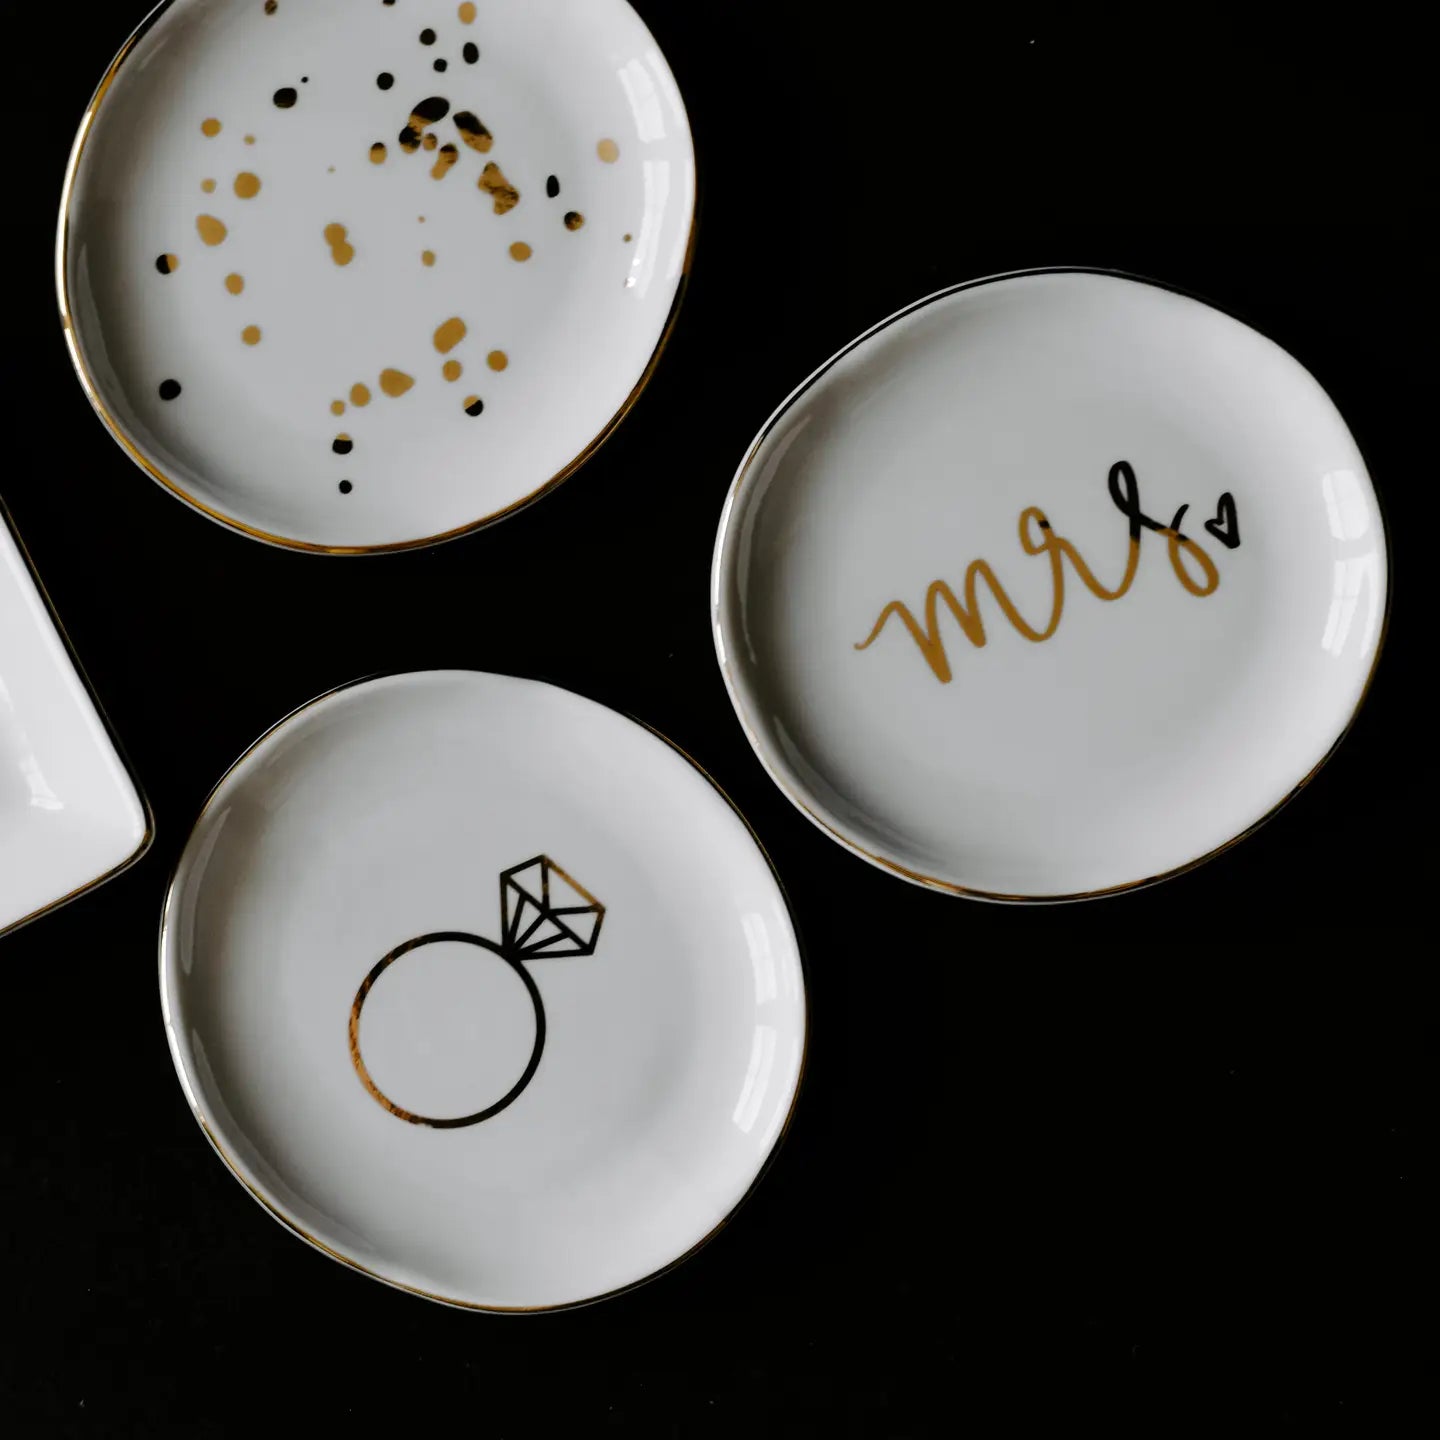 Mrs. Jewelry Dish - Home Decor & Gifts